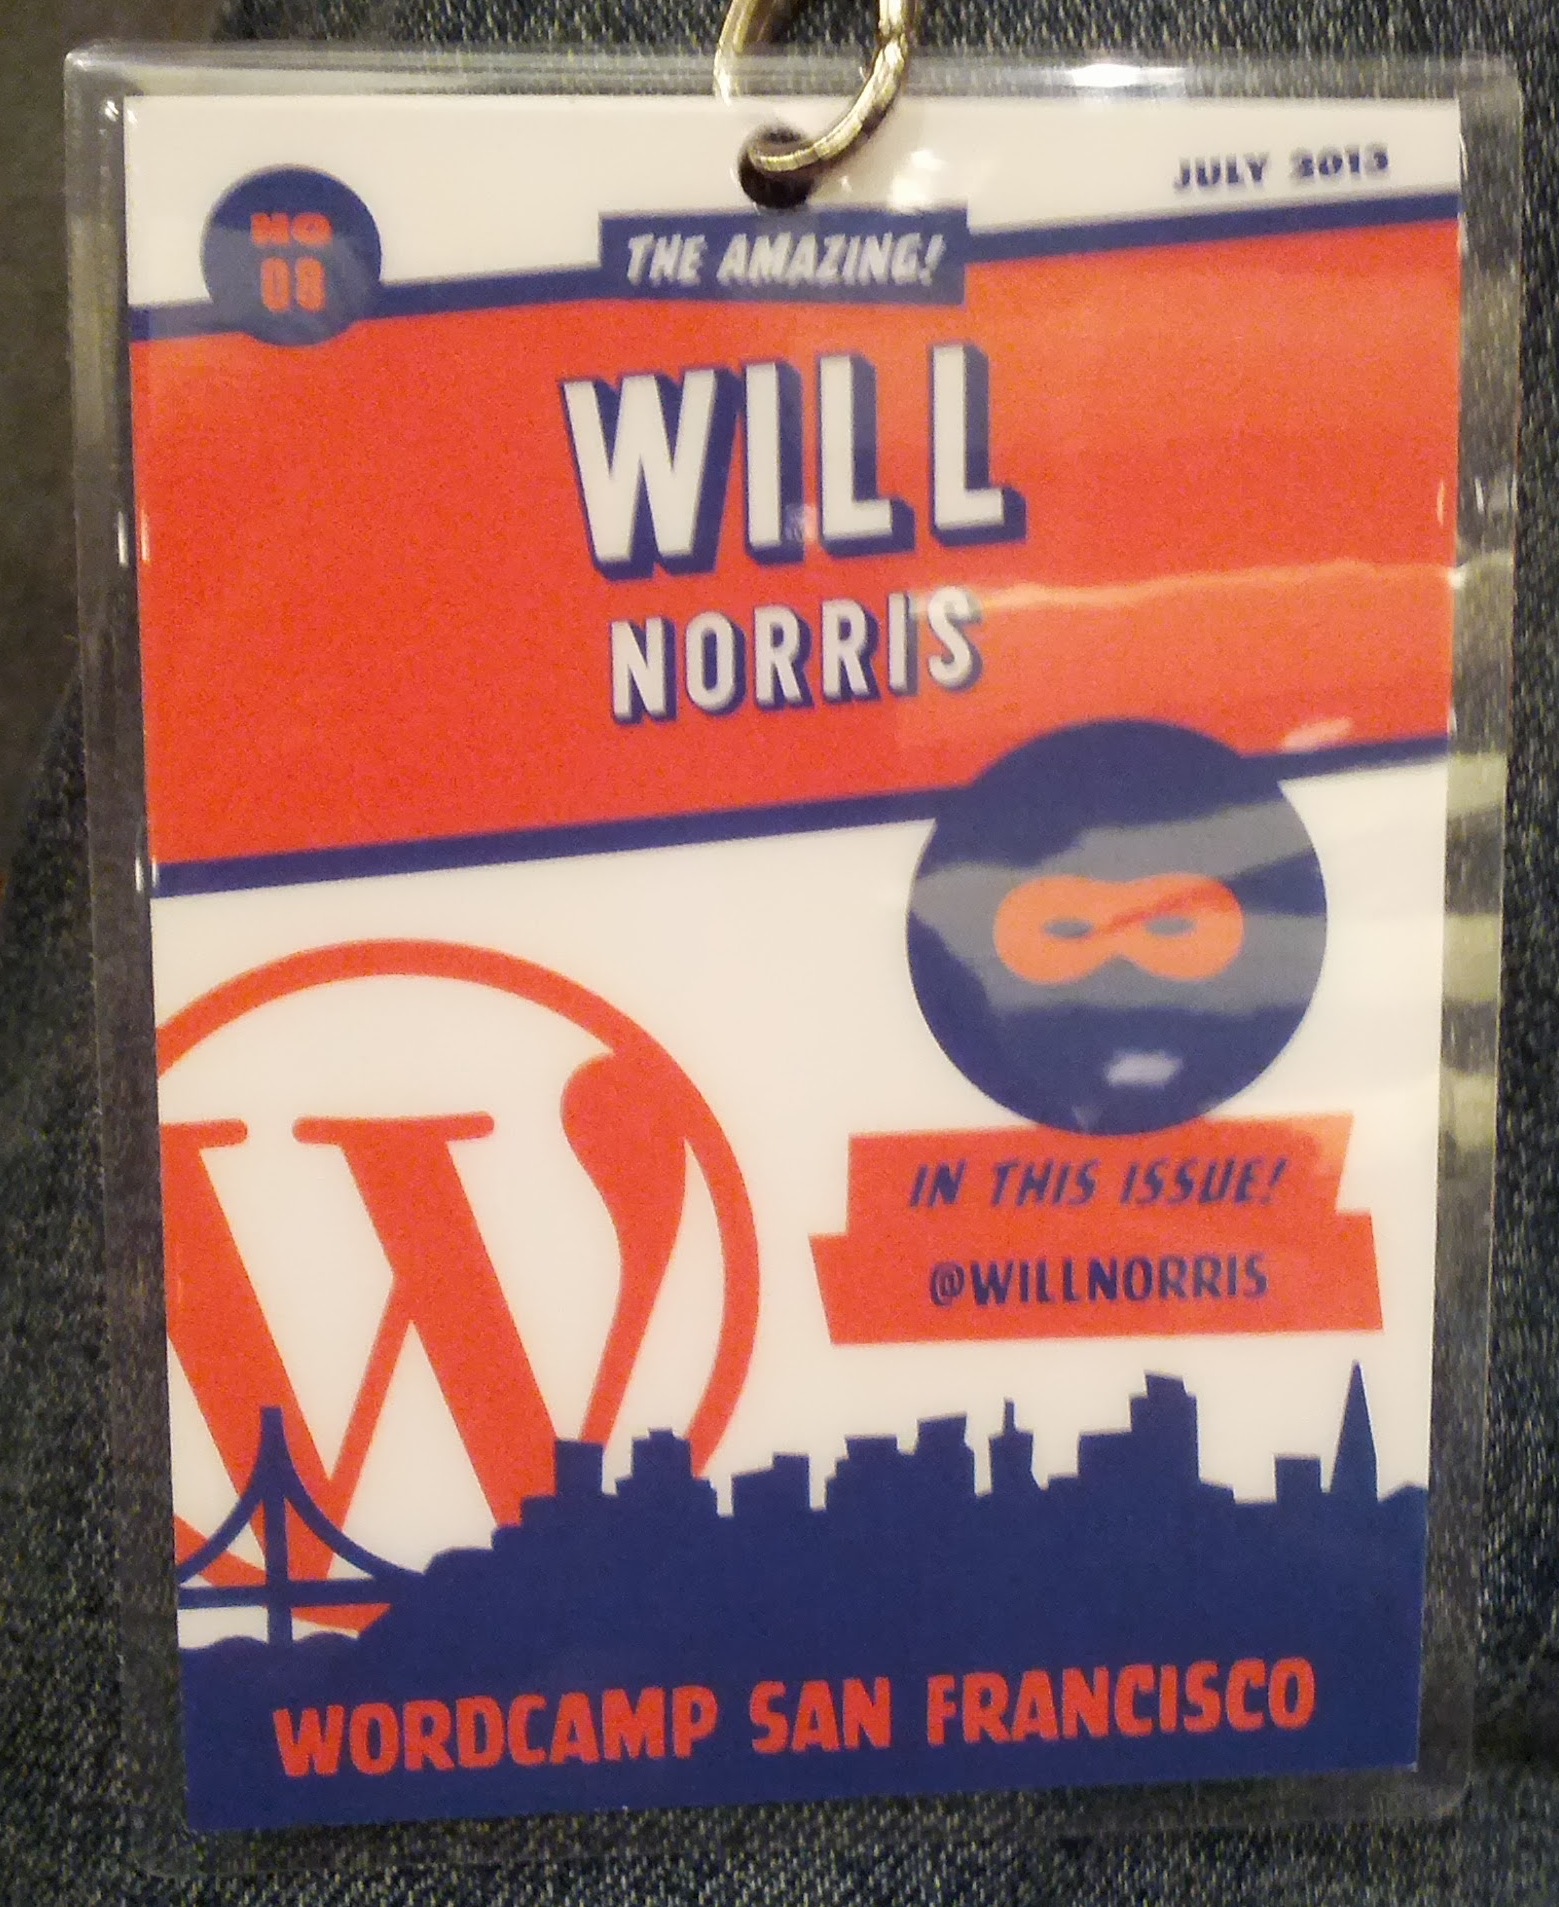 WordCamp badge